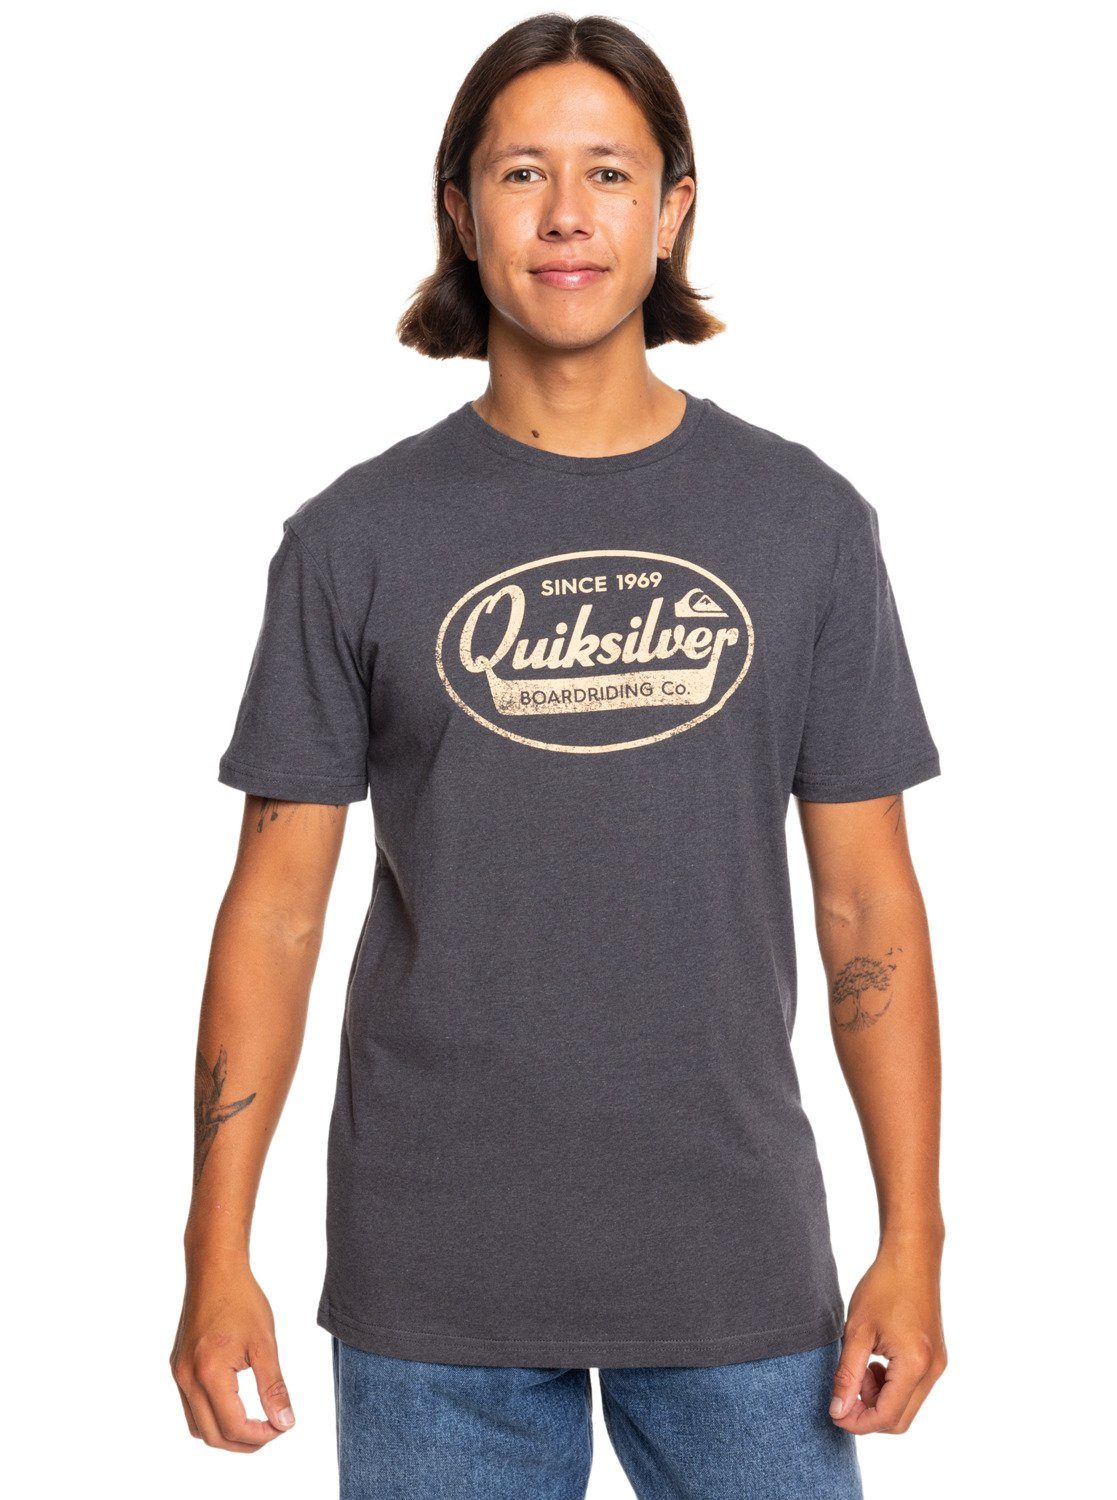 Quiksilver T-Shirt What Best Do We